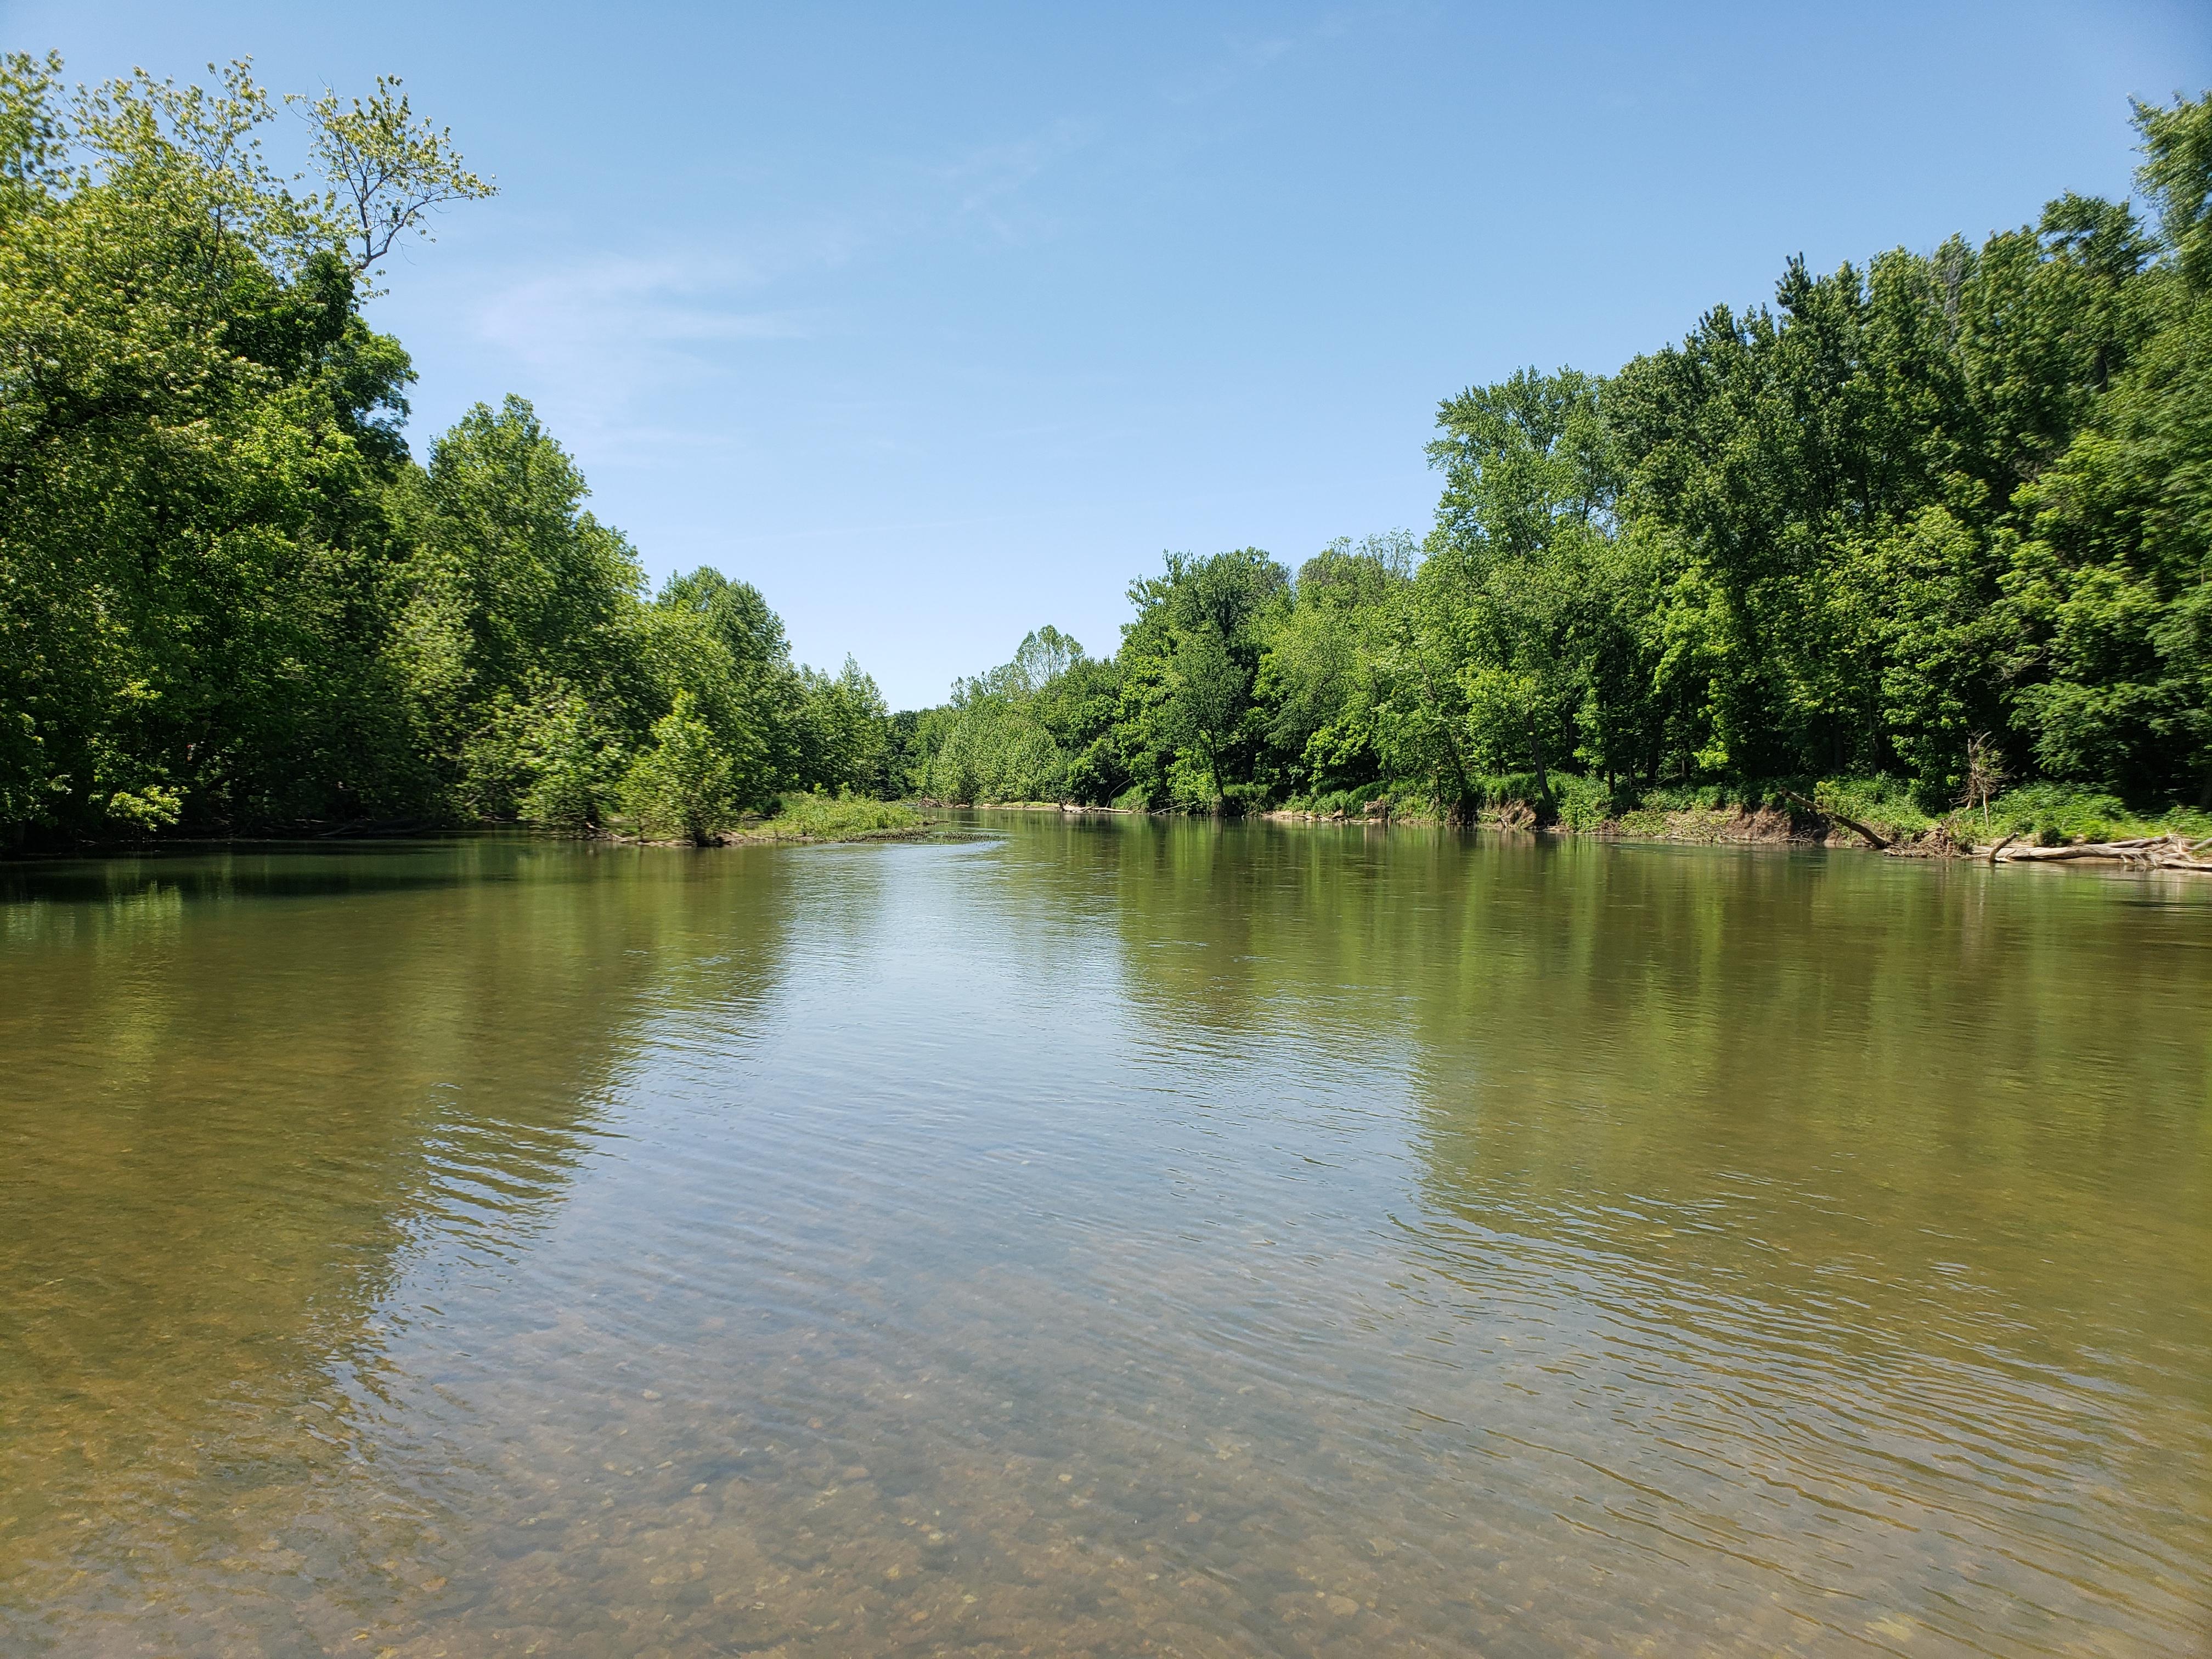 Missour River 2020 - Missouri River - OzarkAnglers.Com Forum